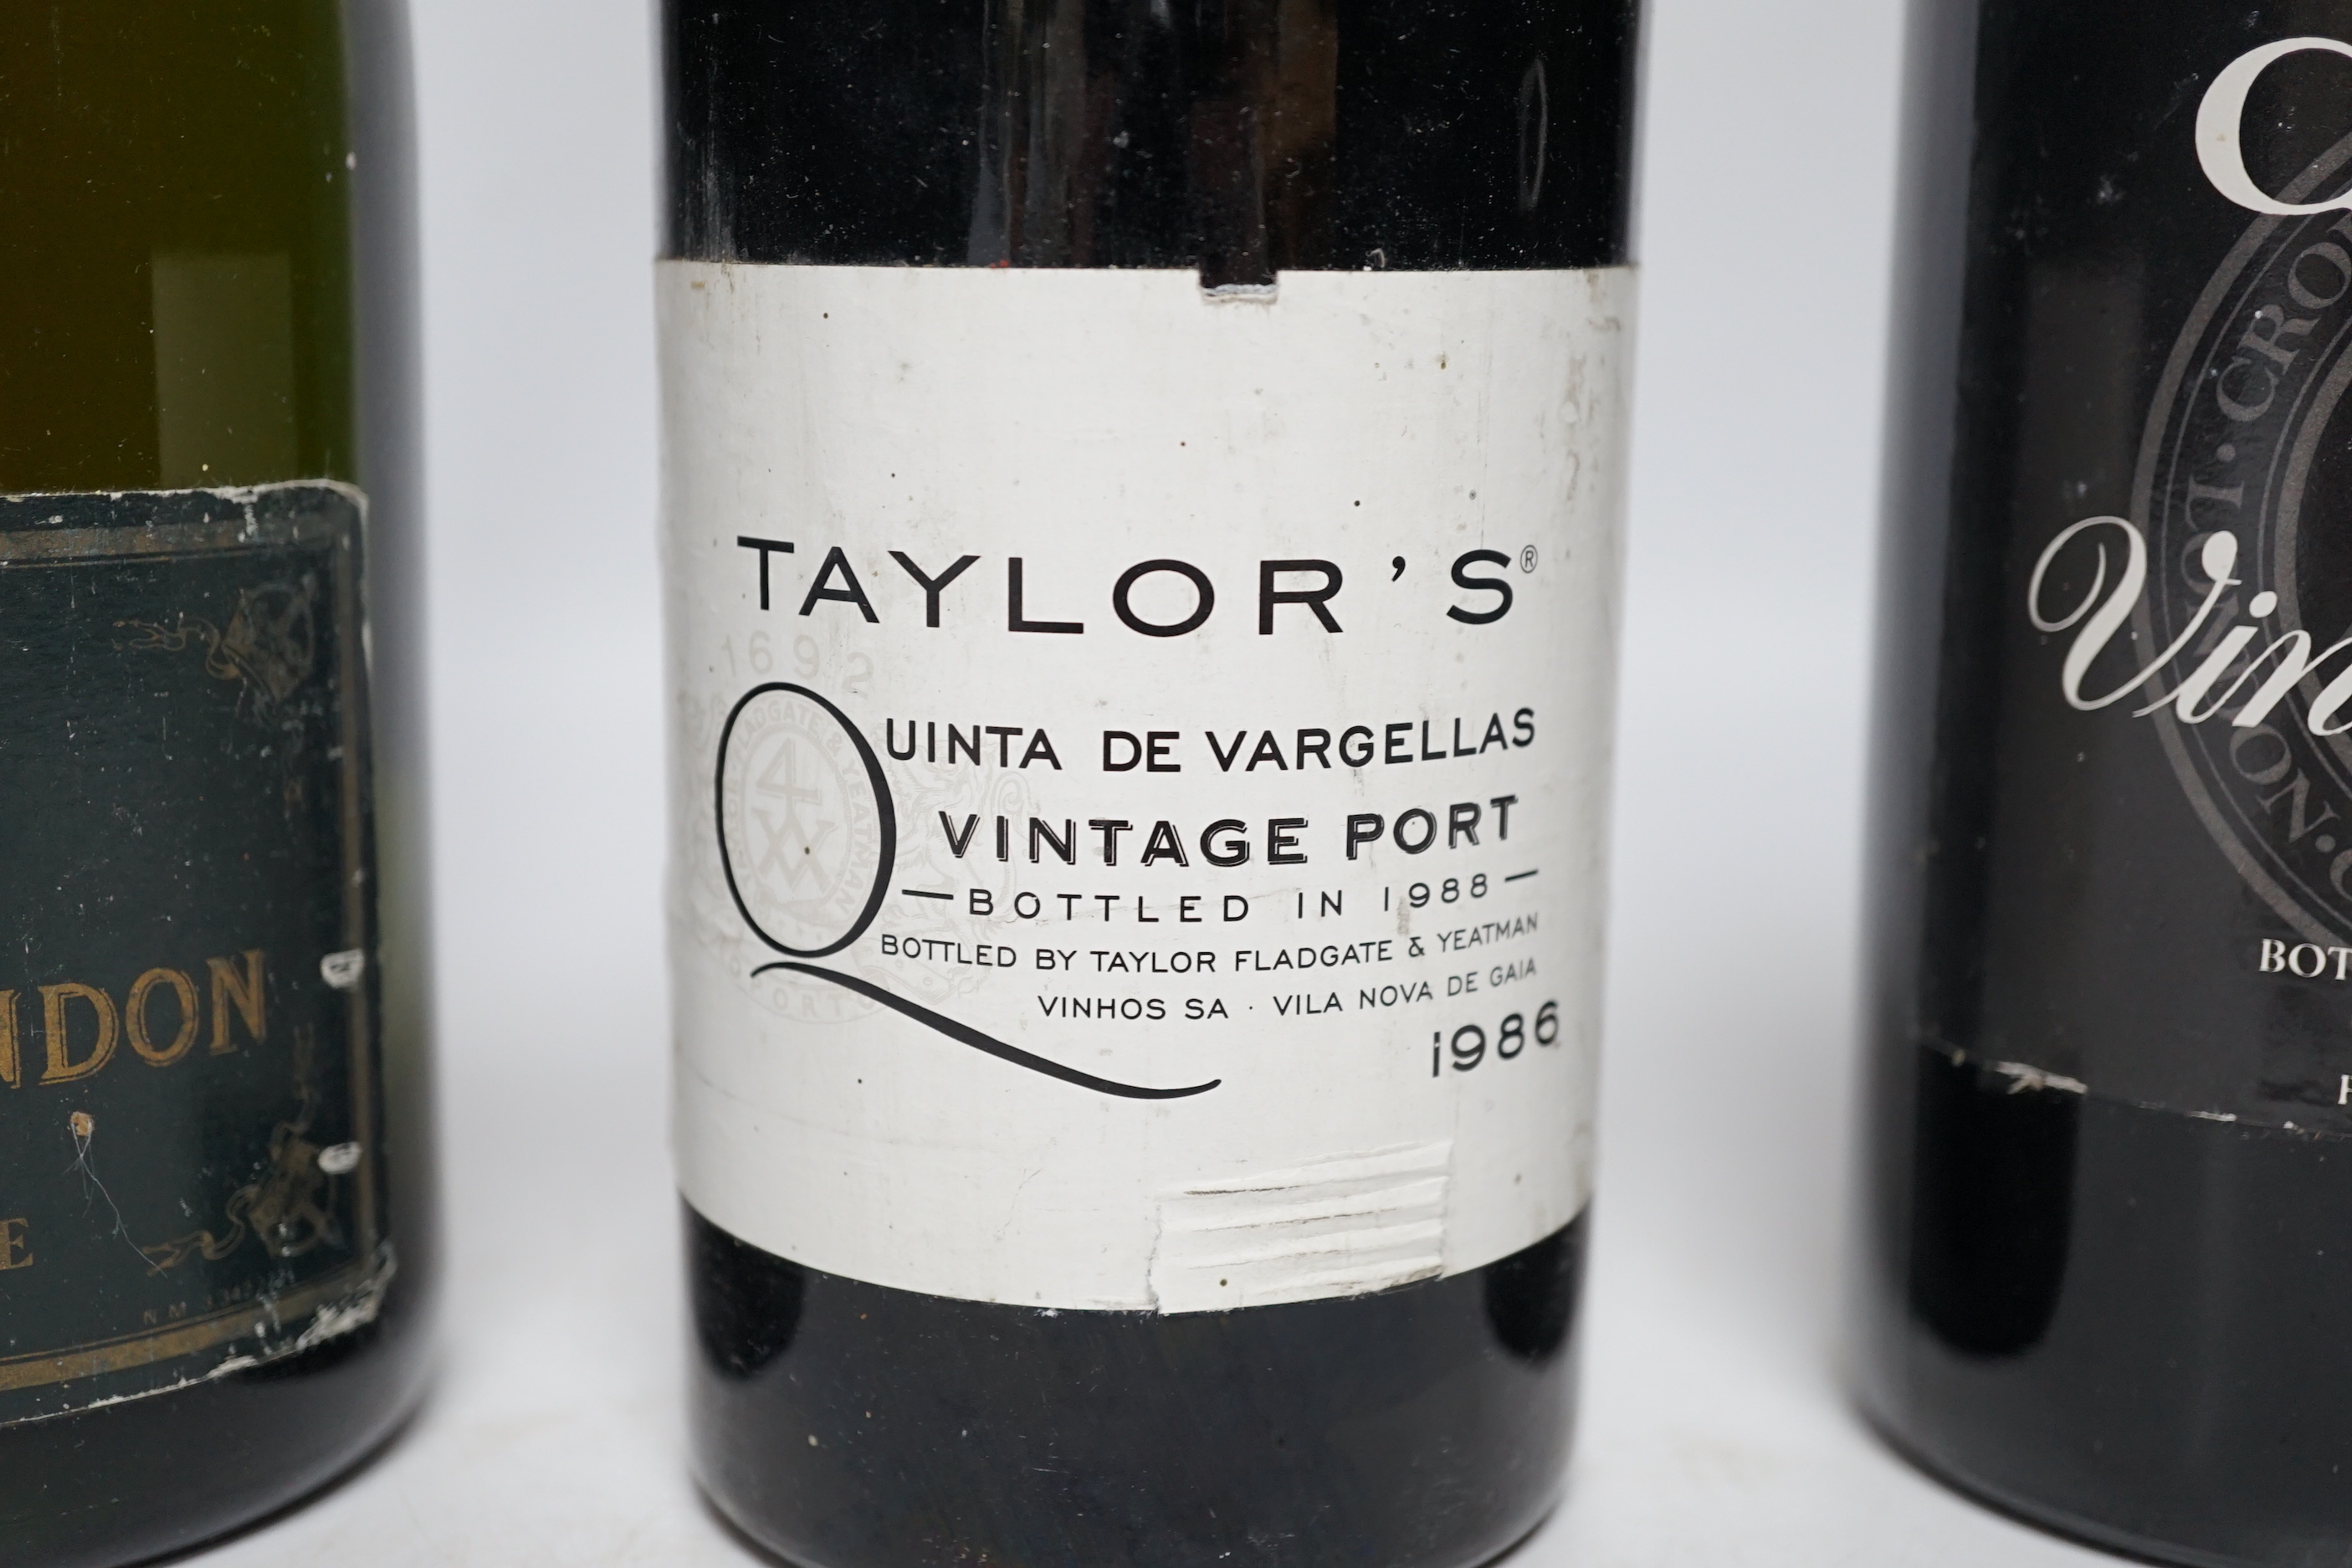 A bottle of Moët & Chandon 1978 Dry Imperial Champagne, a bottle of Croft 1982 Vintage Port and a Taylor’s 1986 Vintage Port (3)